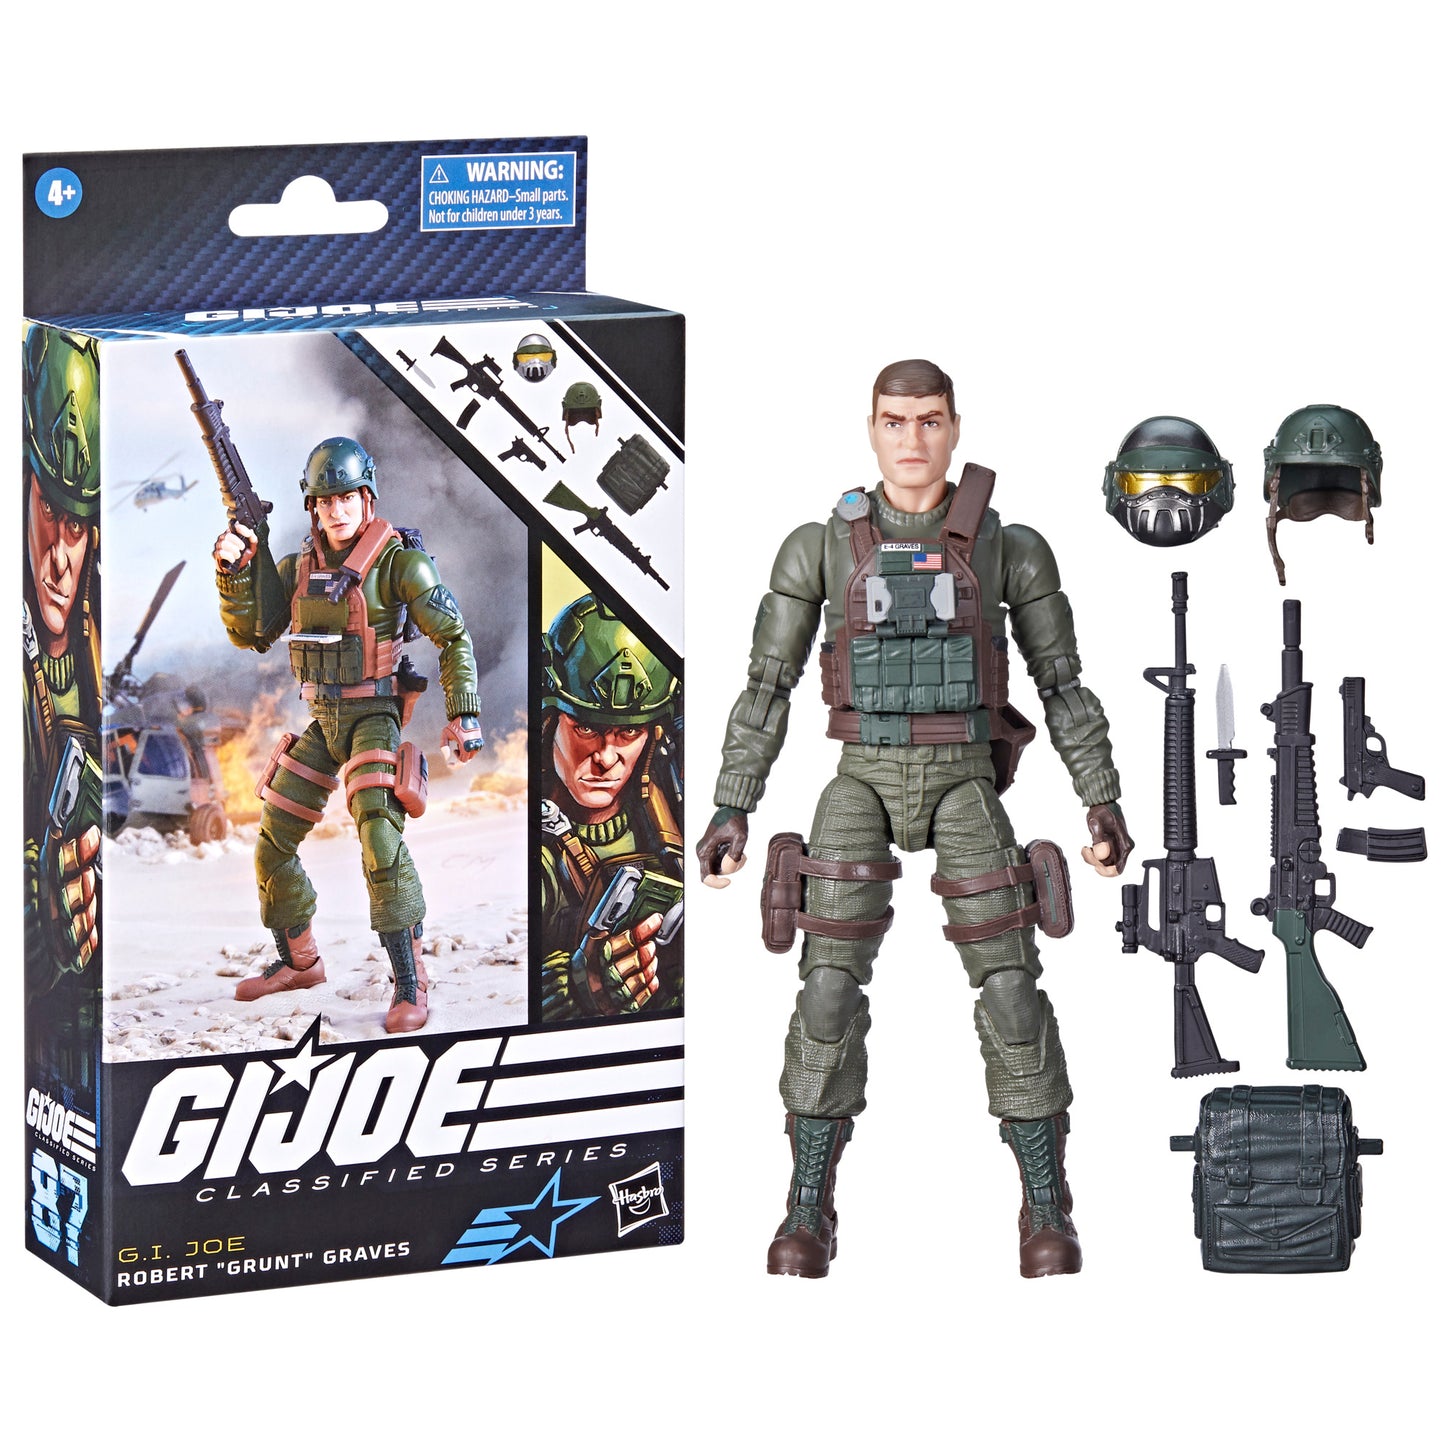 G.I. Joe Classified Series Robert "Grunt" Graves, 87 Action Figure Toy - Heretoserveyou